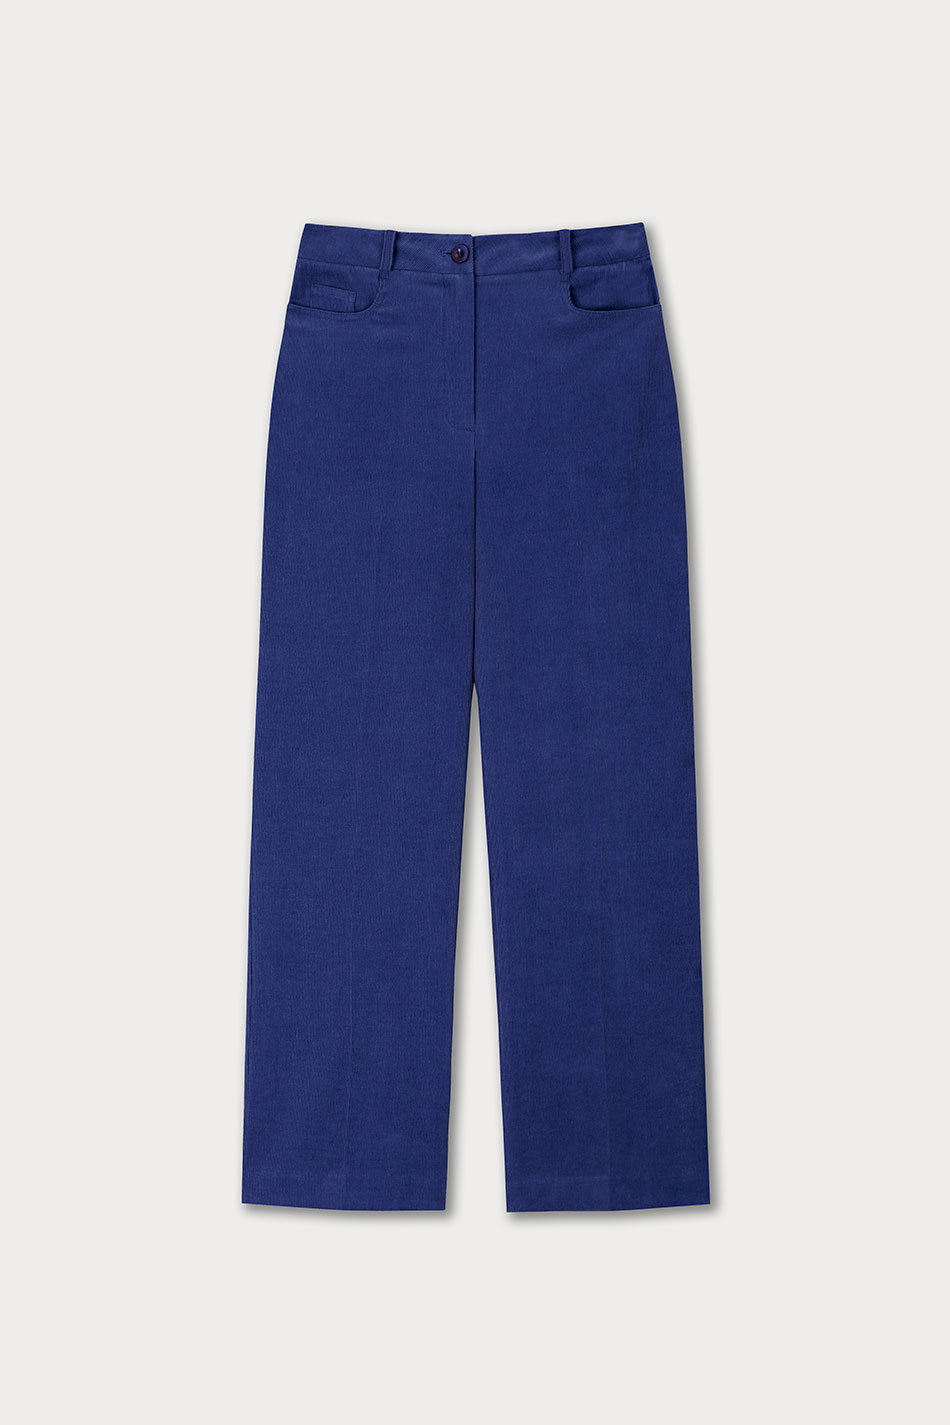 3rd / Straight Corduroy Pants (Persian Blue)